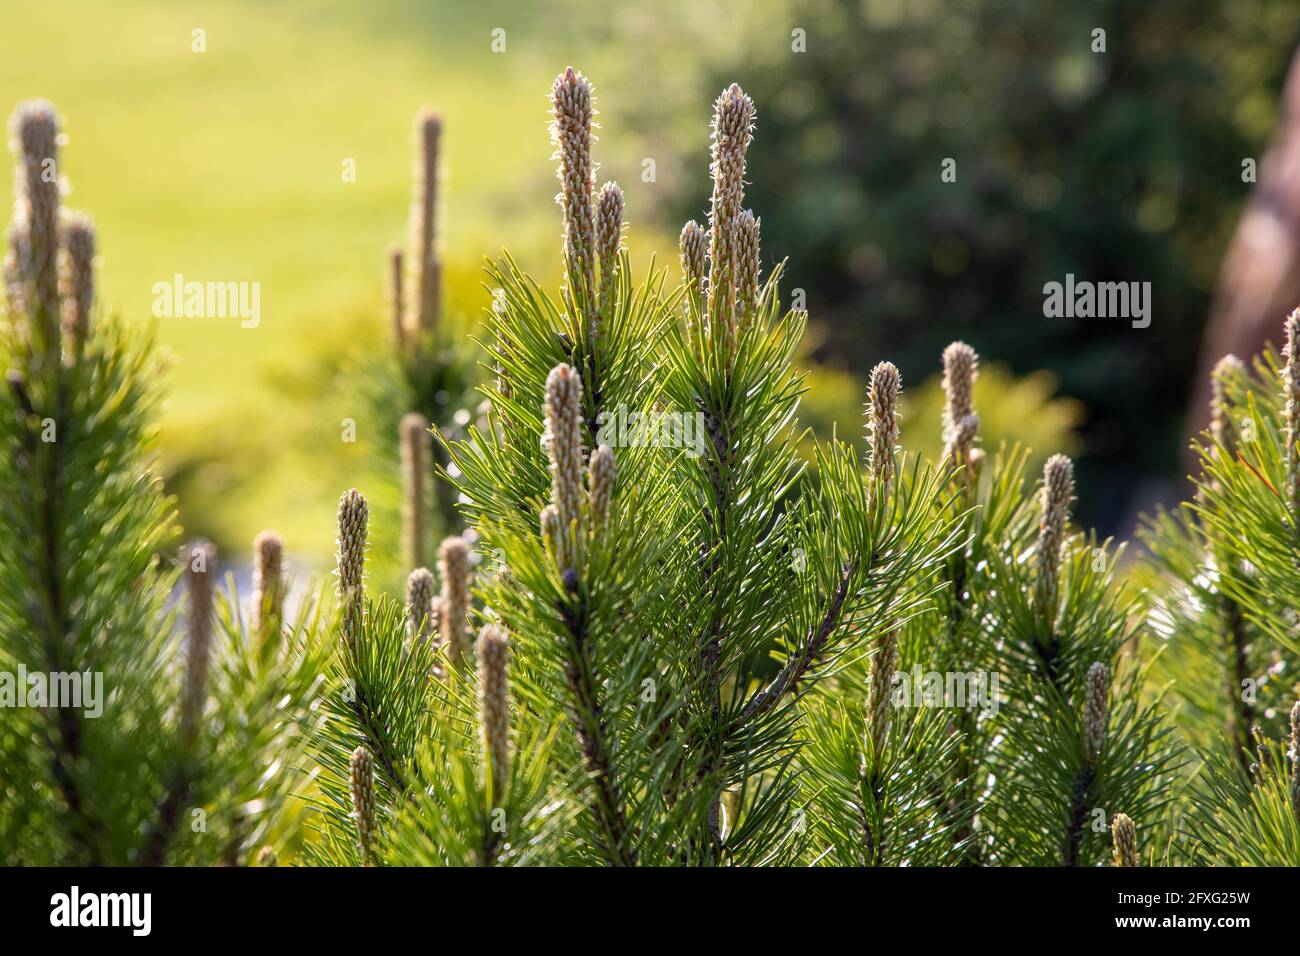 Young Pine buds in spring. Pinus sylvestris, pinus nigra, mountain pine. Pinus tree on a sunny spring day Stock Photo